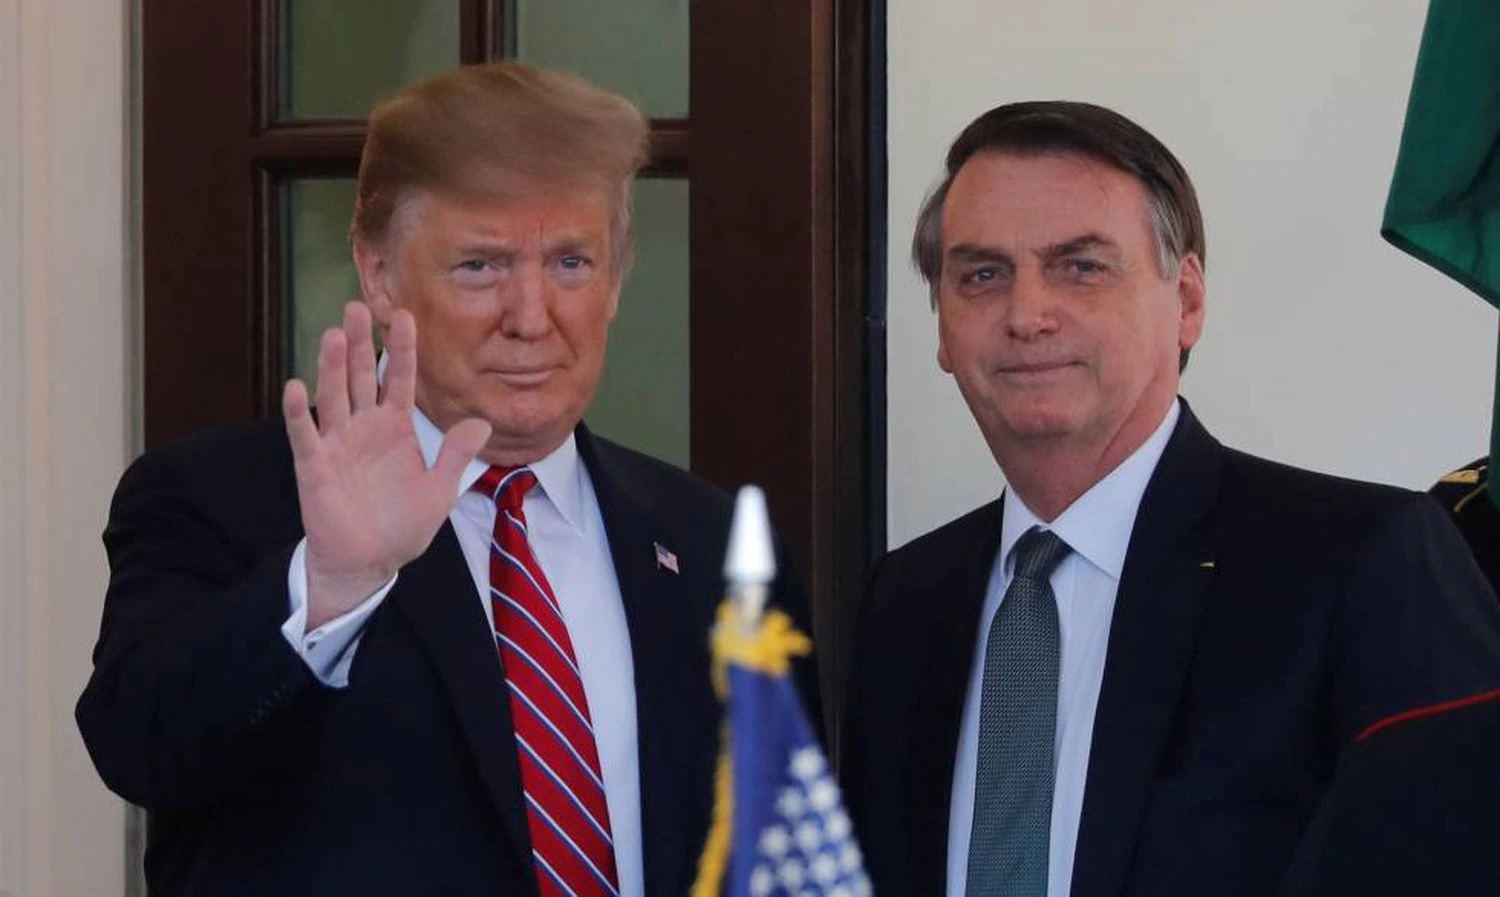 Brazilian President Jair Bolsonaro asked his US counterpart, Donald Trump, for help.